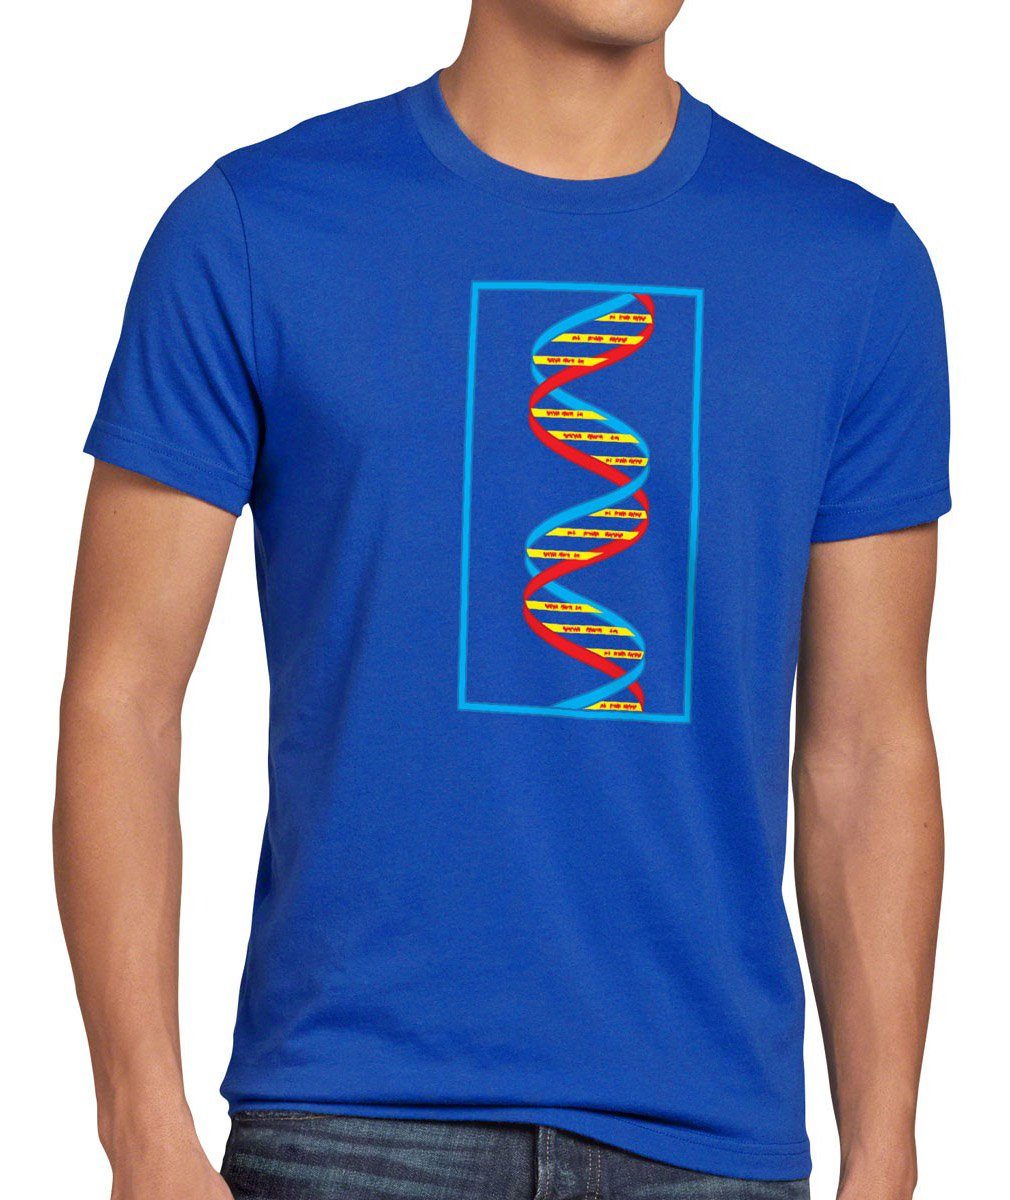 Bang Cooper Serie style3 Bazinga Big blau Theory T-Shirt dns Sheldon Print-Shirt DNA Herren tbbt bio Fan